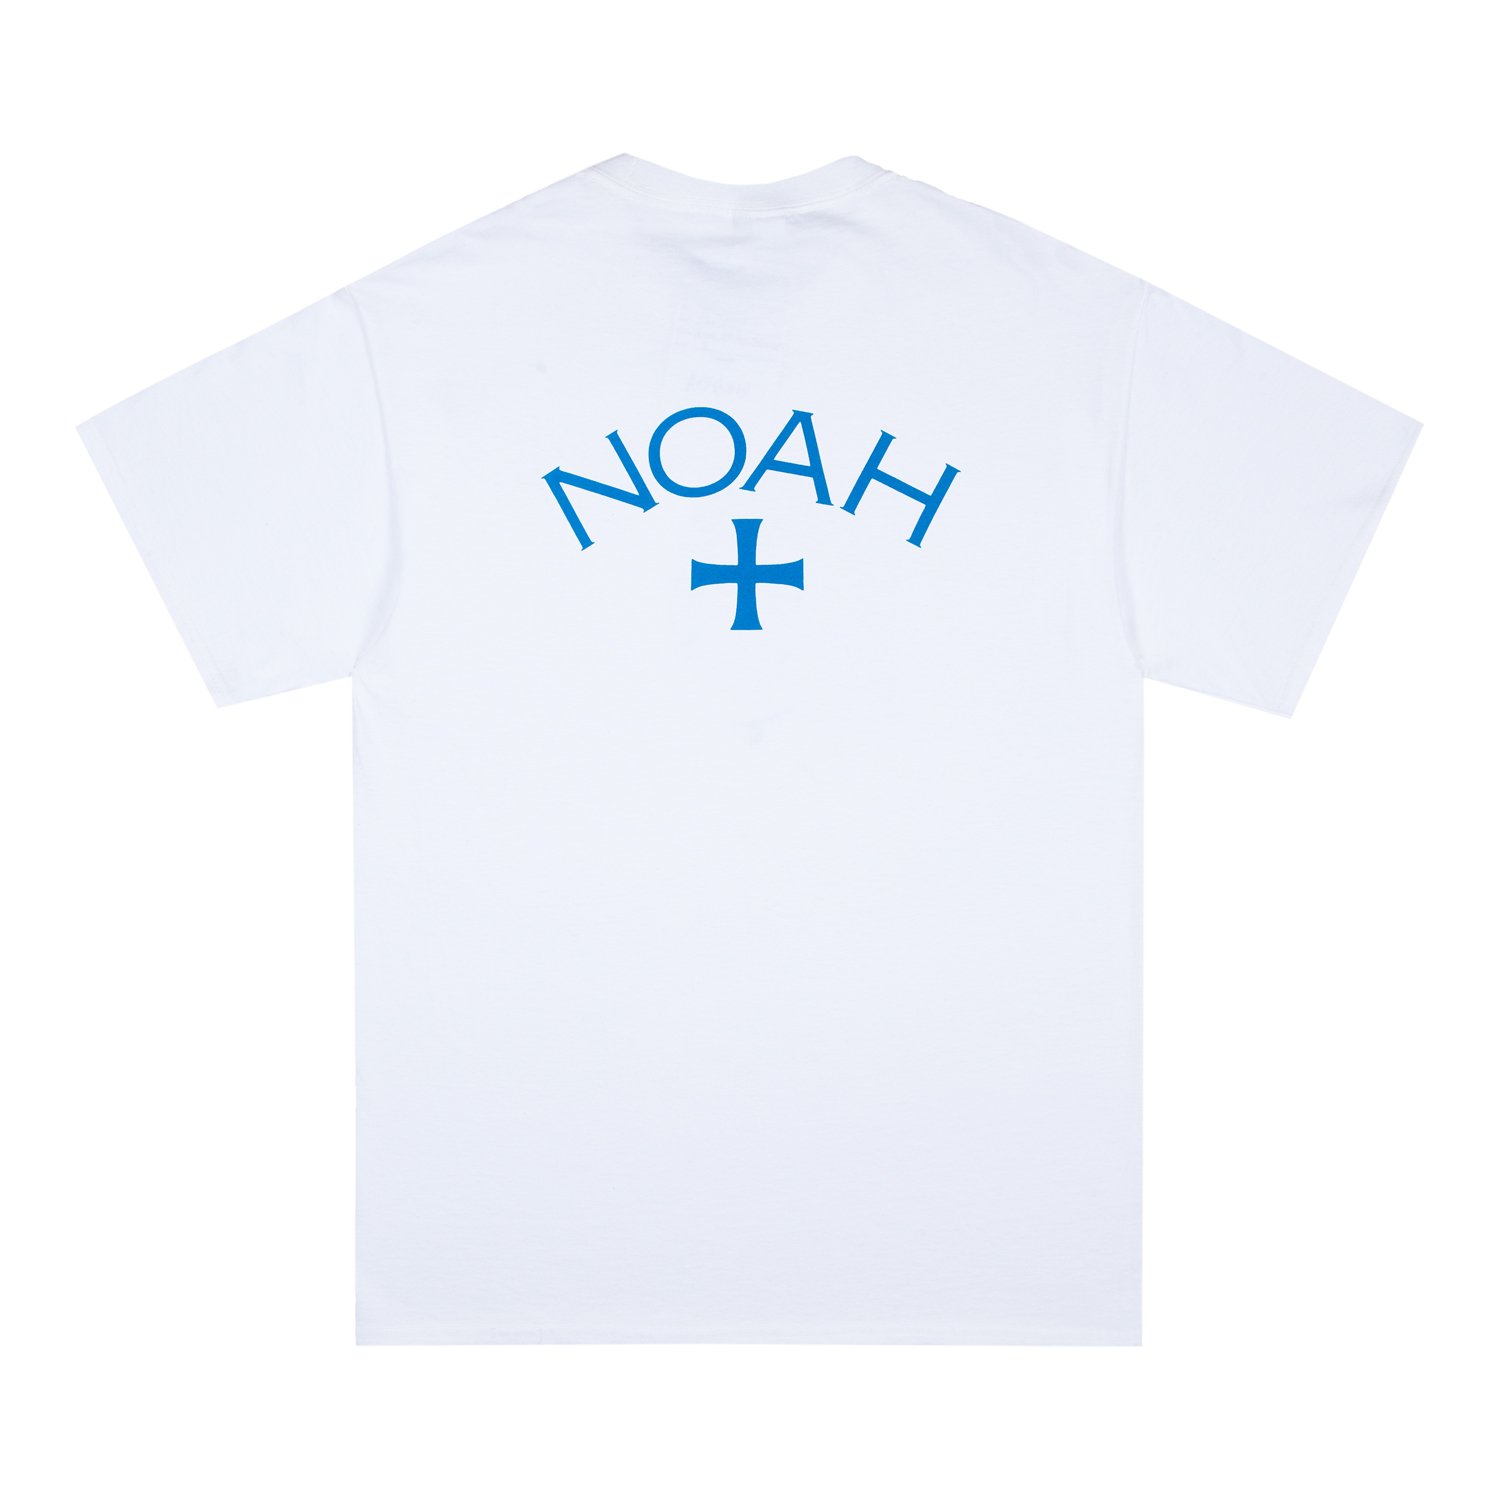 Frog x Noah Core Logo Teeホワイト新品未使用